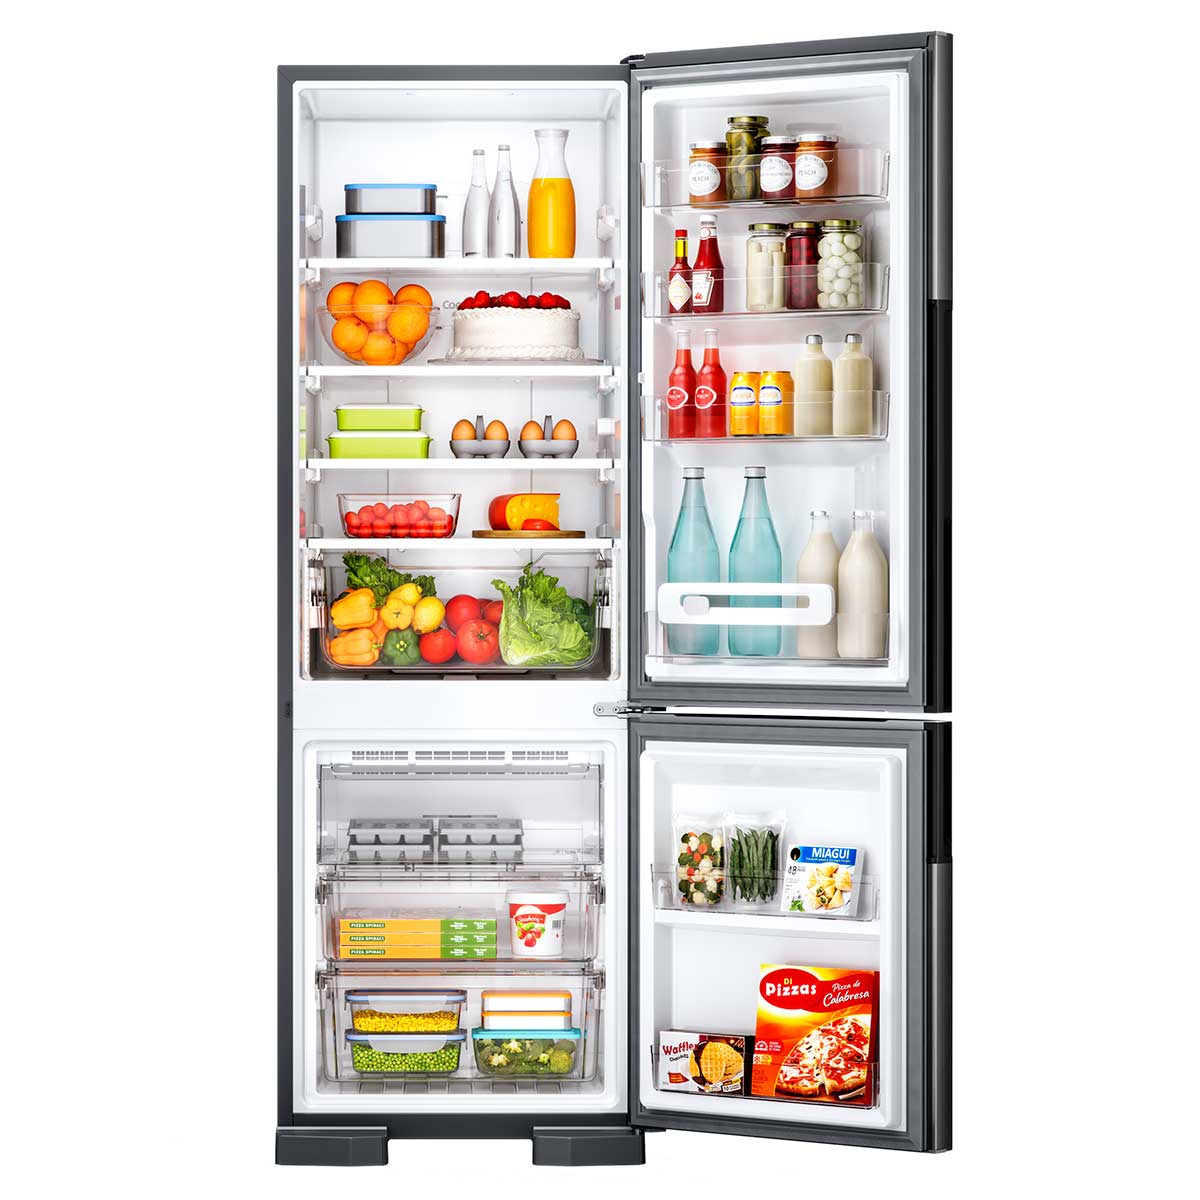 geladeira-consul-refrigerador-frost-free-duplex-inverse-397-l-cre44bk-inox-220-volts-4.jpg